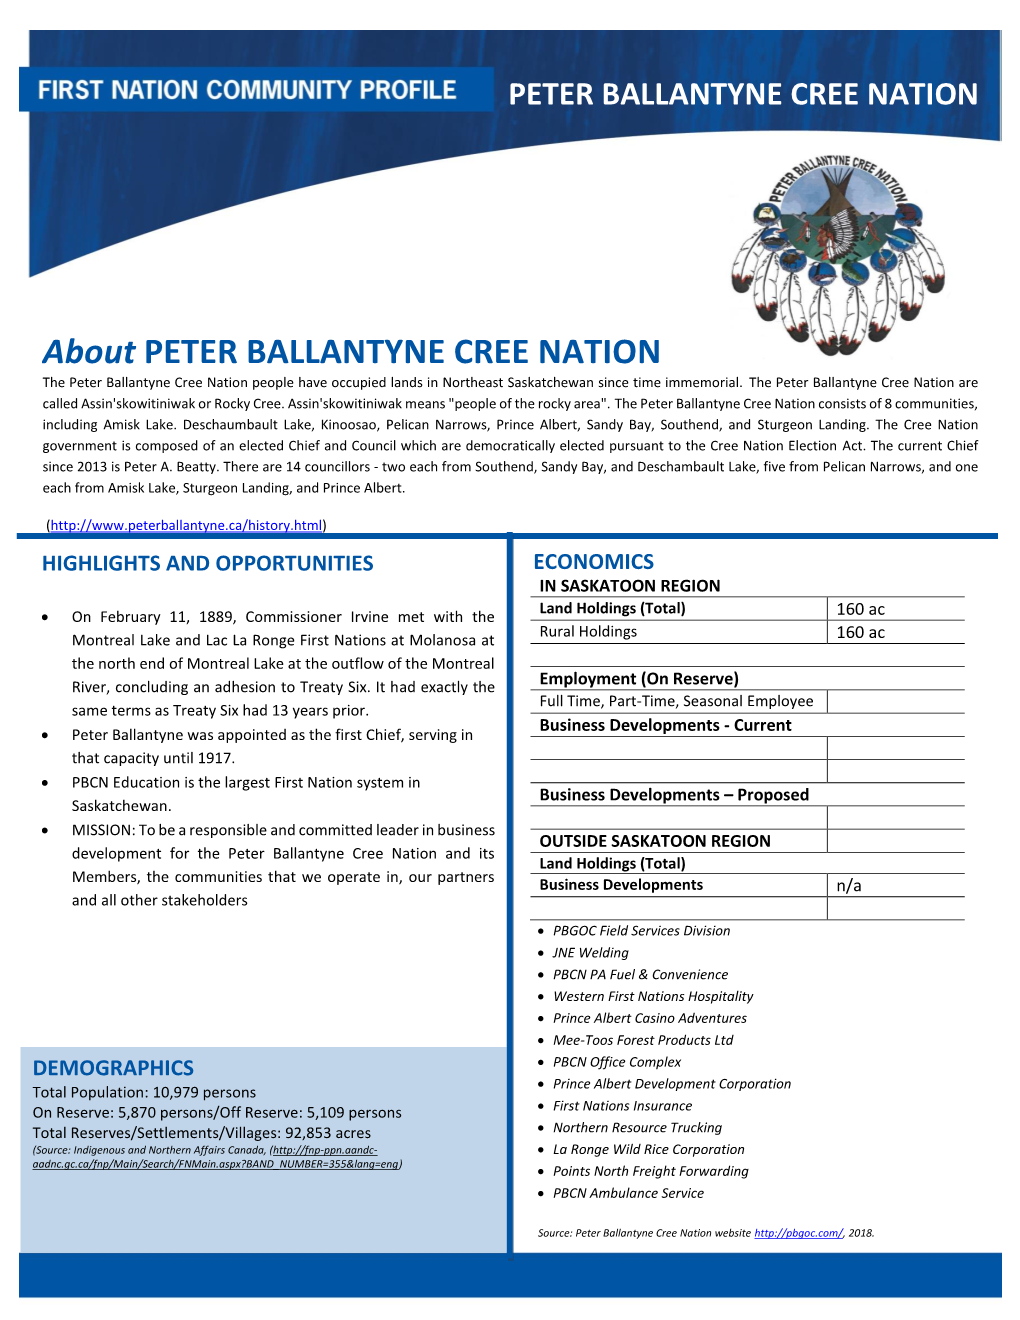 About PETER BALLANTYNE CREE NATION the Peter Ballantyne Cree Nation People Have Occupied Lands in Northeast Saskatchewan Since Time Immemorial